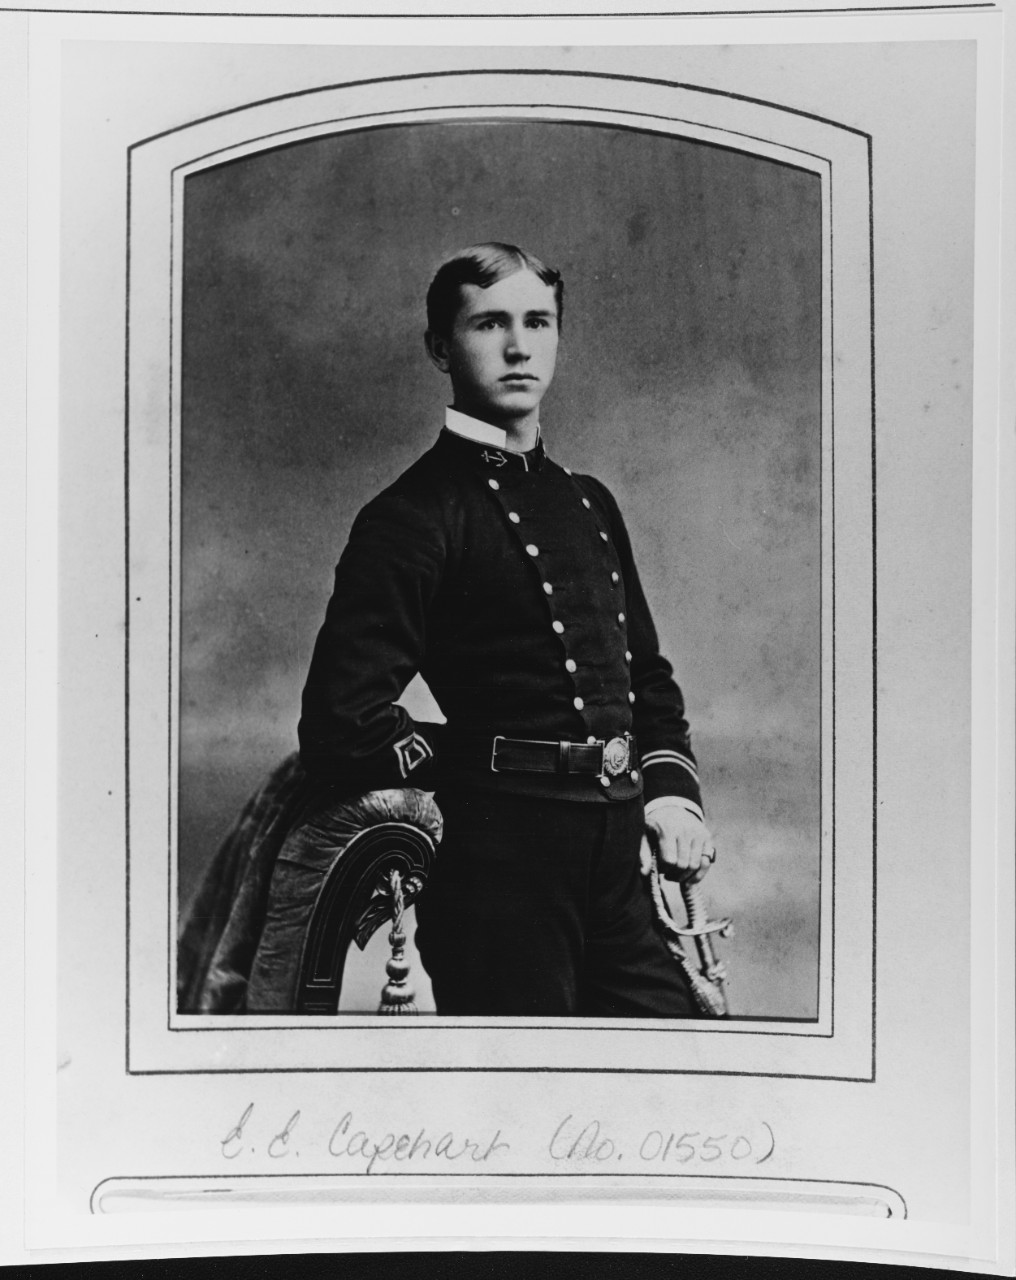 Captain Edward Everett Capehart, USN